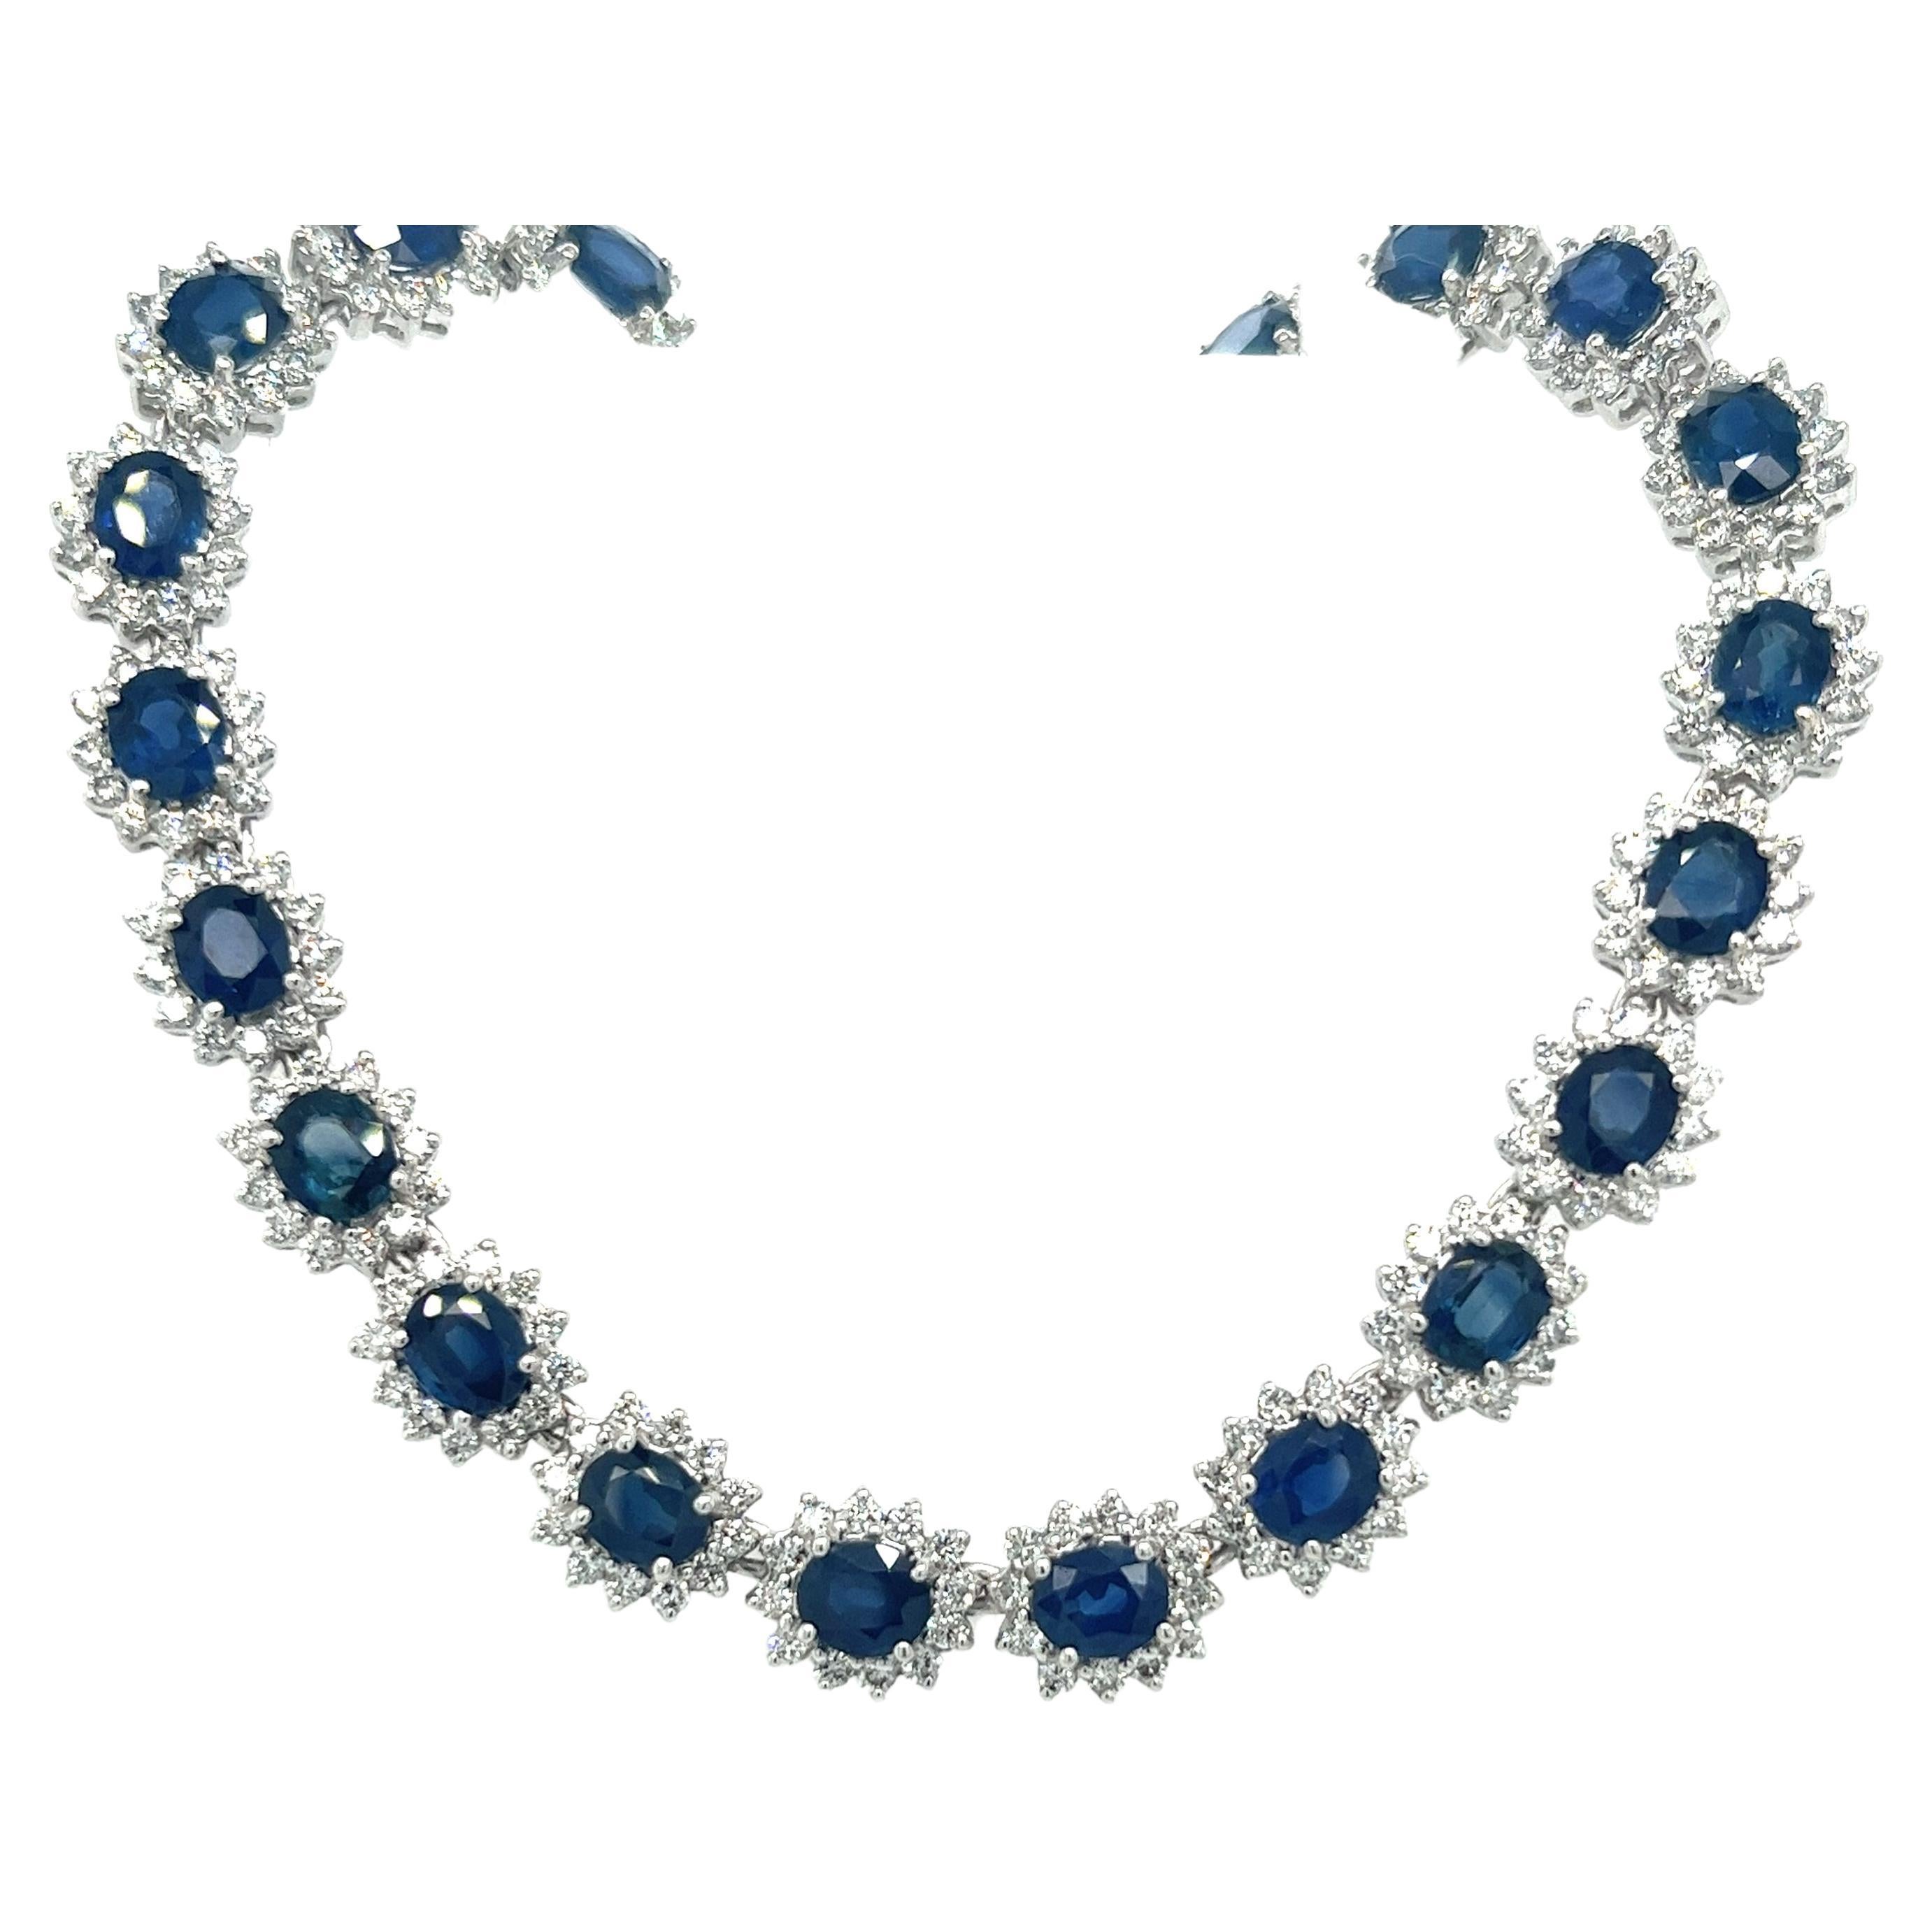 36 Carat Oval Cut Blue Sapphire & Diamond Halo Choker Necklace in 18k White Gold